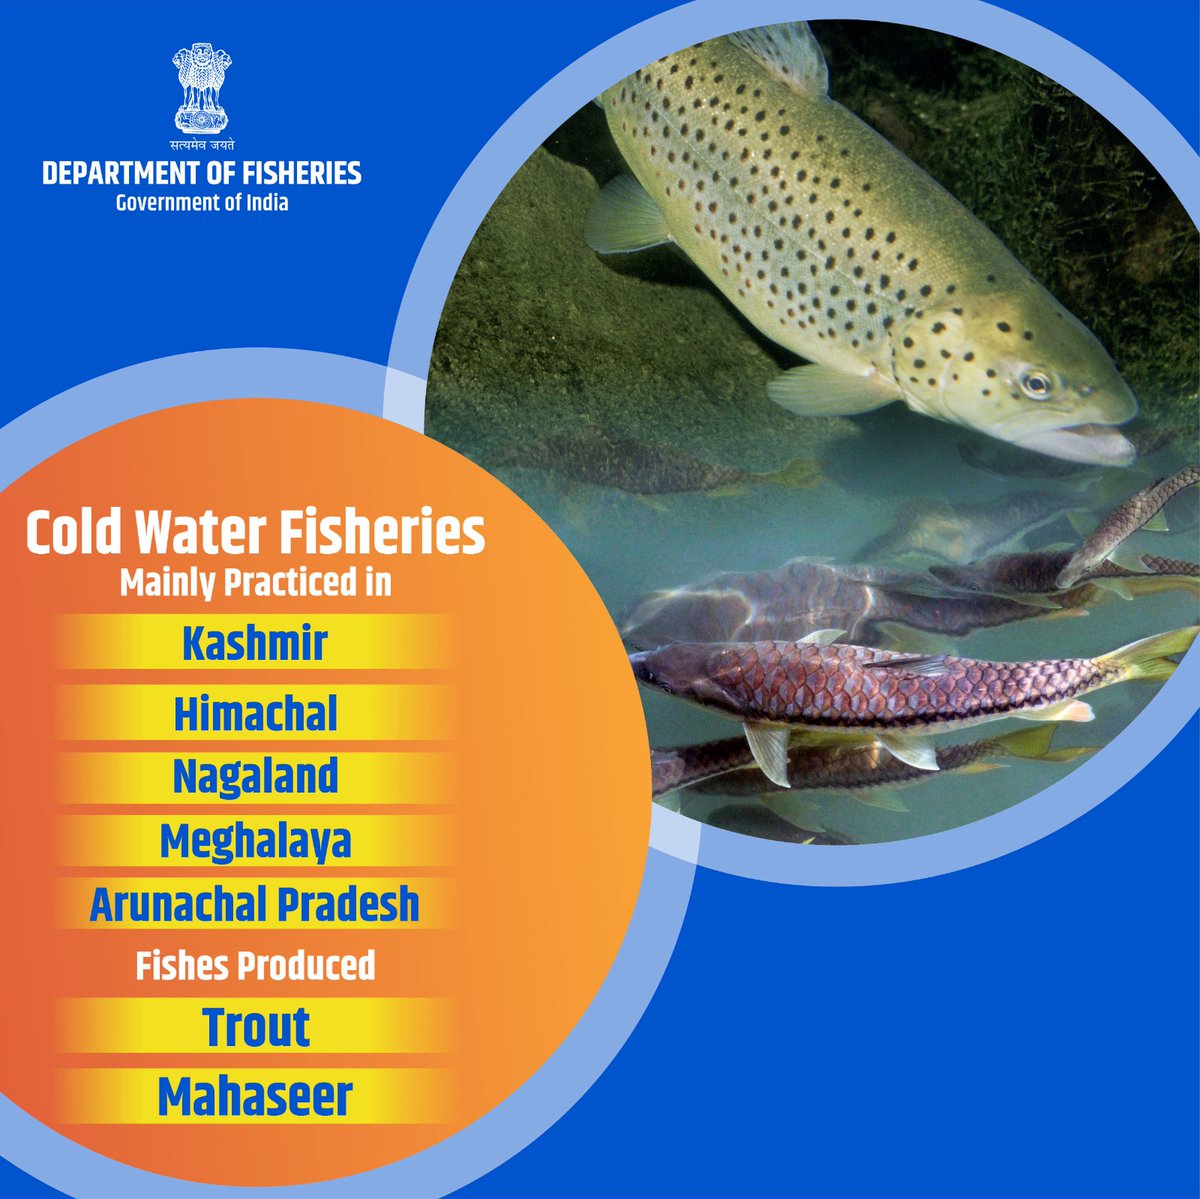 Did you know that cold water fisheries are primarily practiced in #Kashmir, #HimachalPradesh, #Nagaland, #Meghalaya, and #ArunachalPradesh?